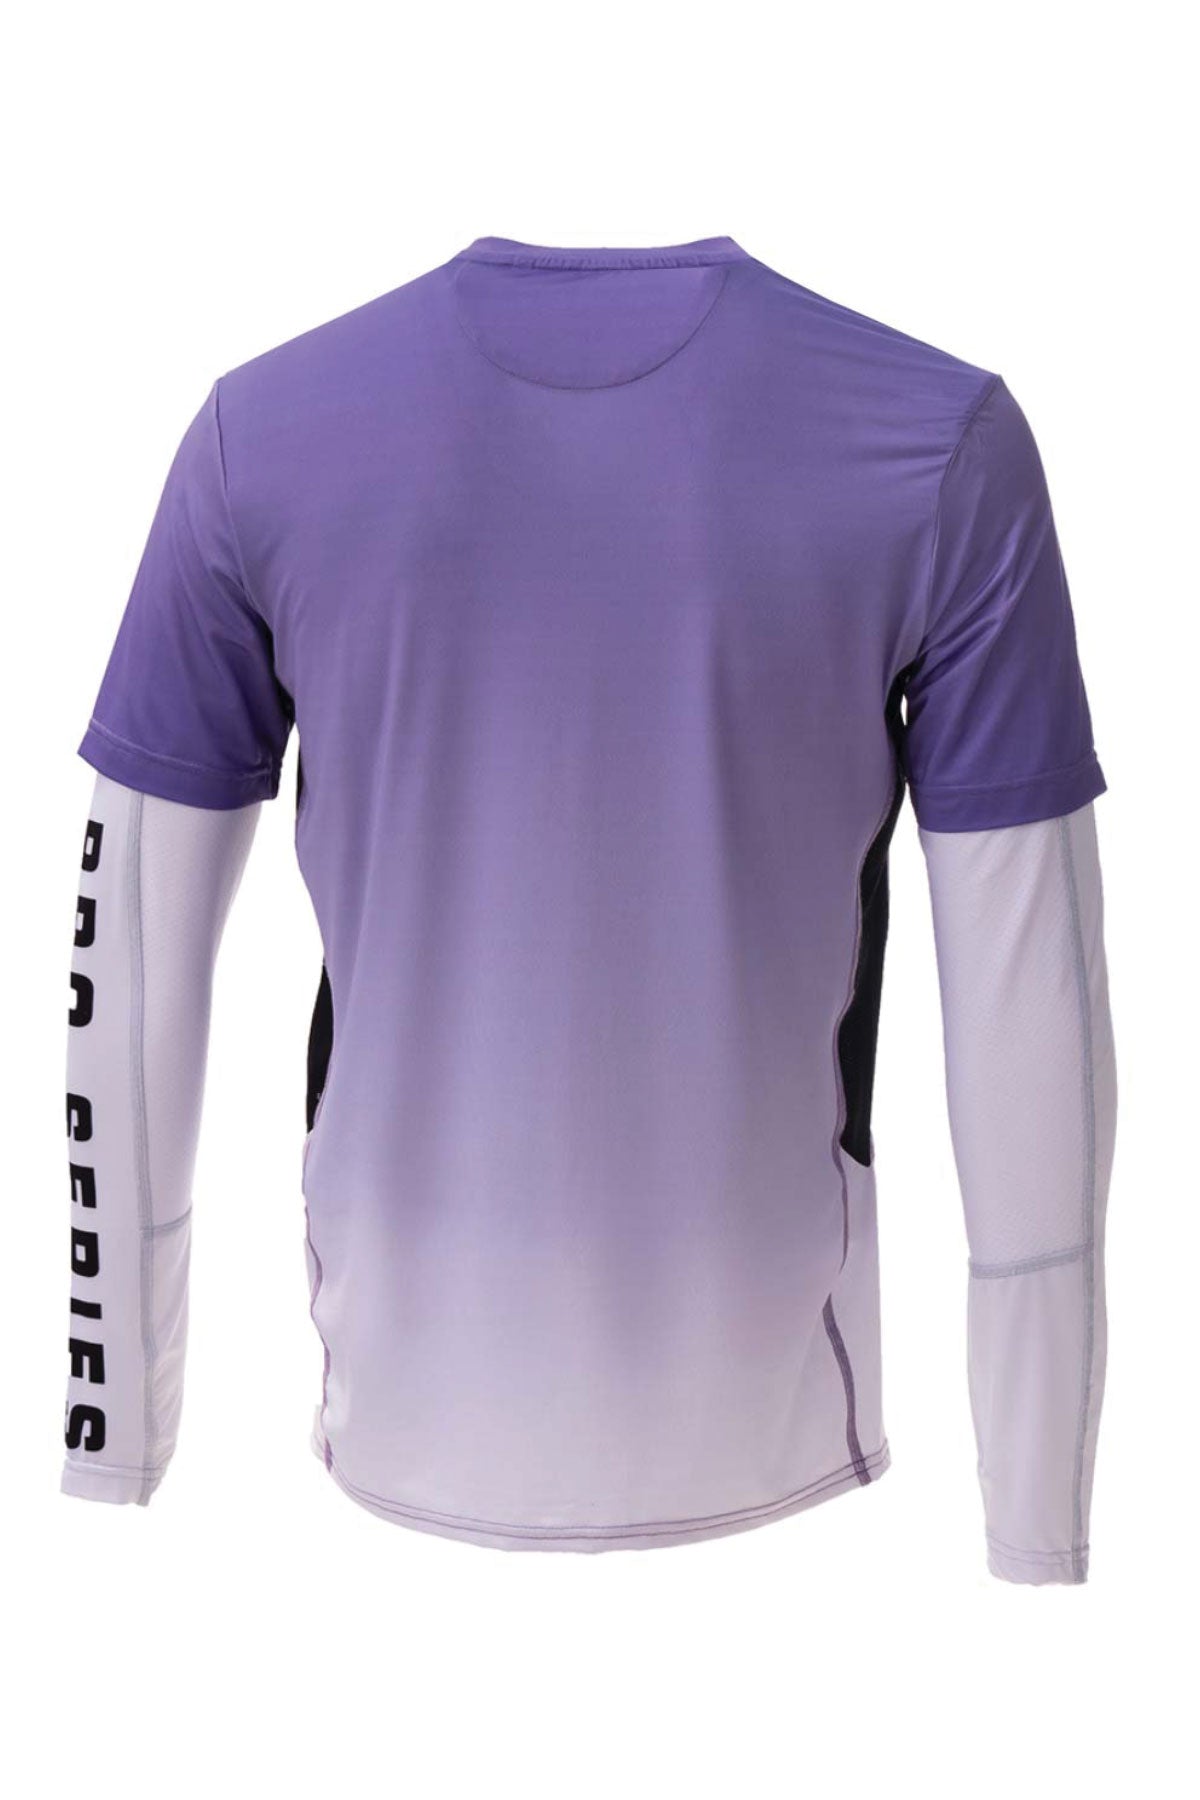 Ahoy Long and Short Sleeve Together Fishing Shirt -Purple - Stafu Pro Series